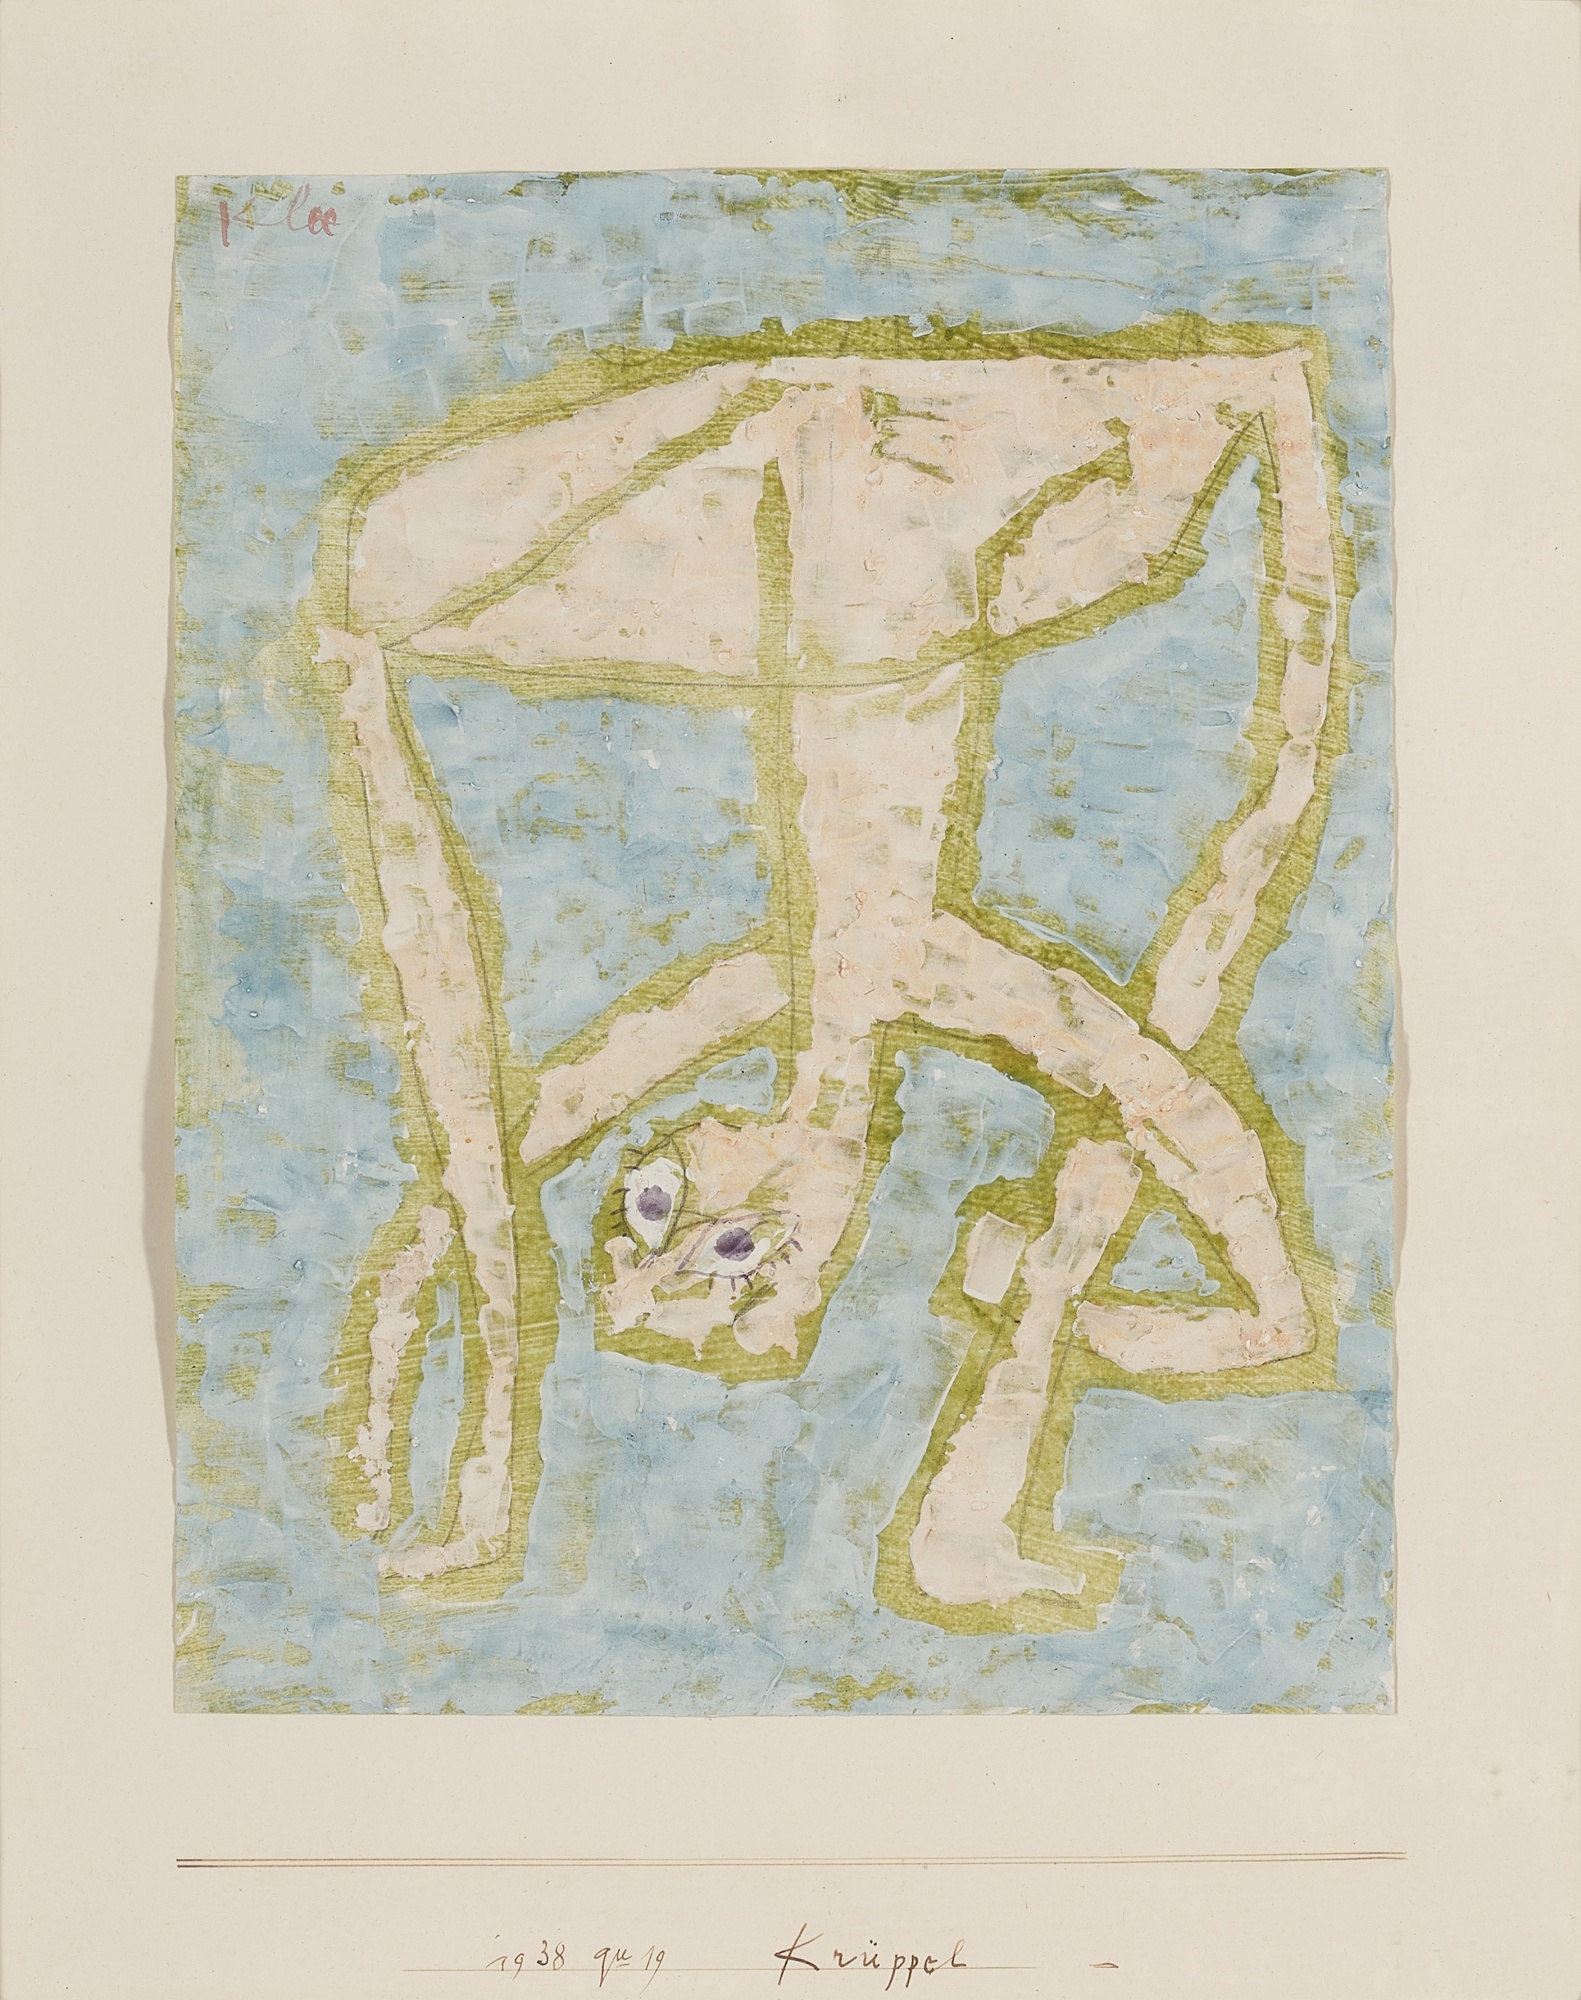 Krüppel (Cripple) by Paul Klee, 1938